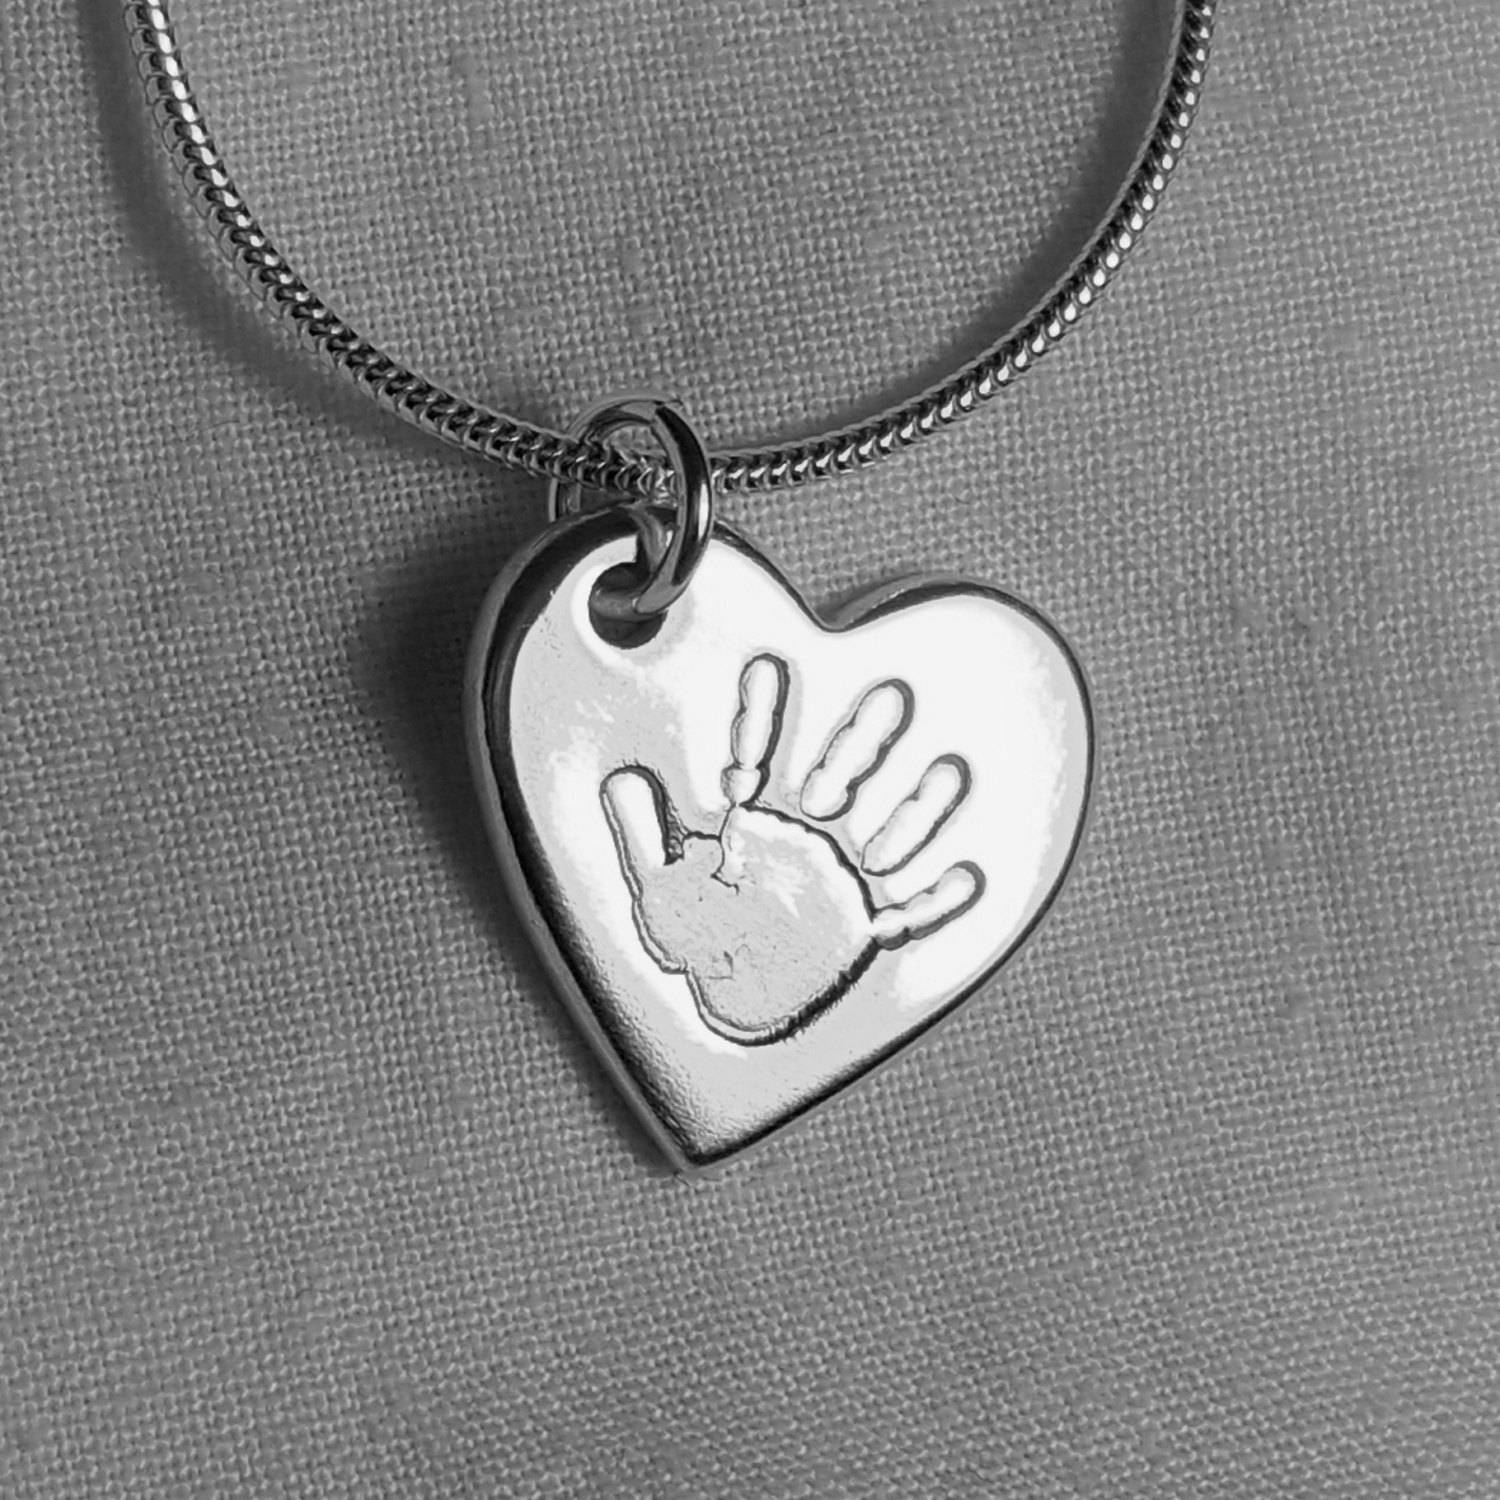 Handprint Necklace Personalized Silver Footprint Handprint Fingerprint Jewellery Chain Pendant Charm